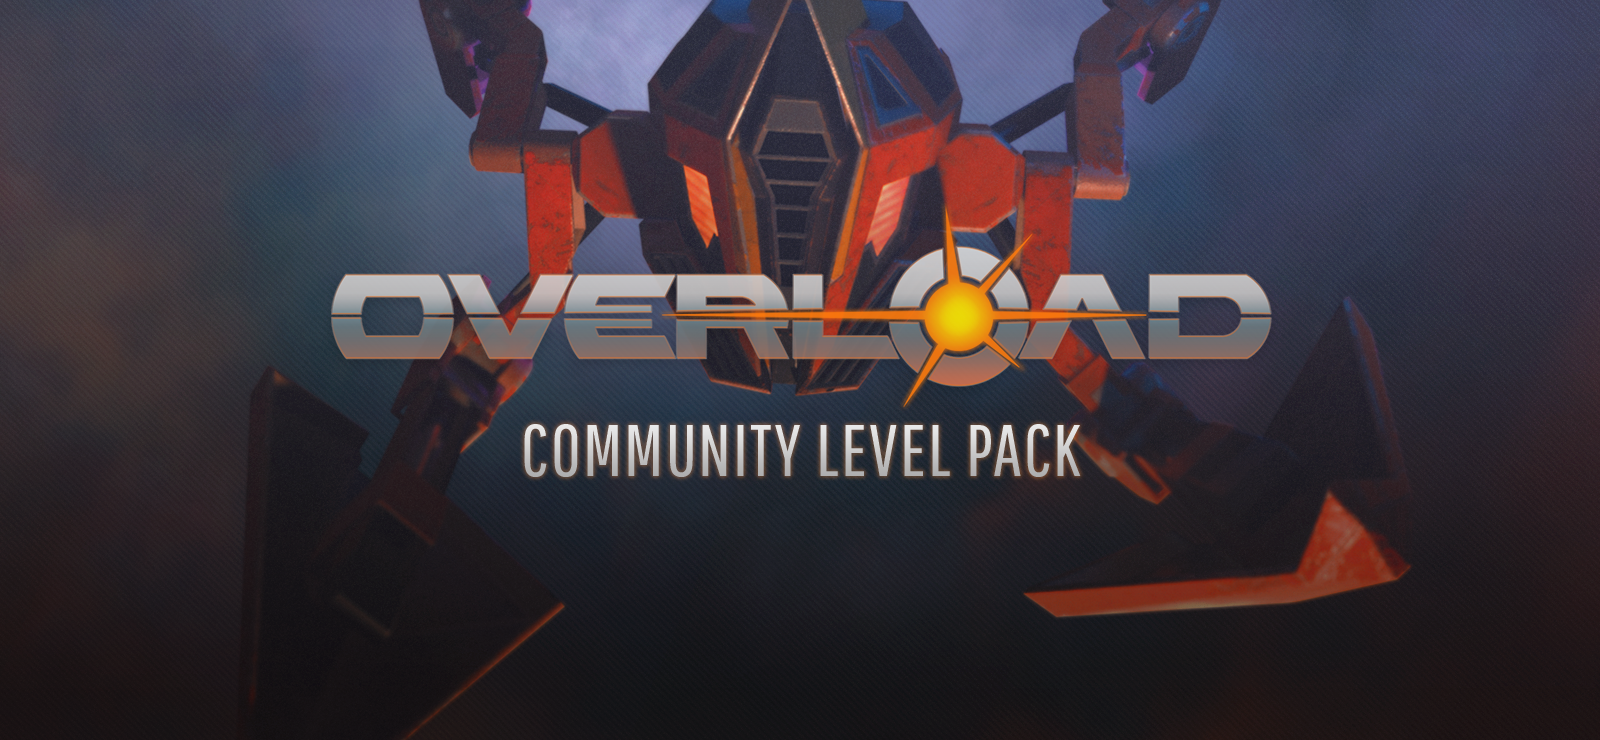 Overload - Community Level Pack